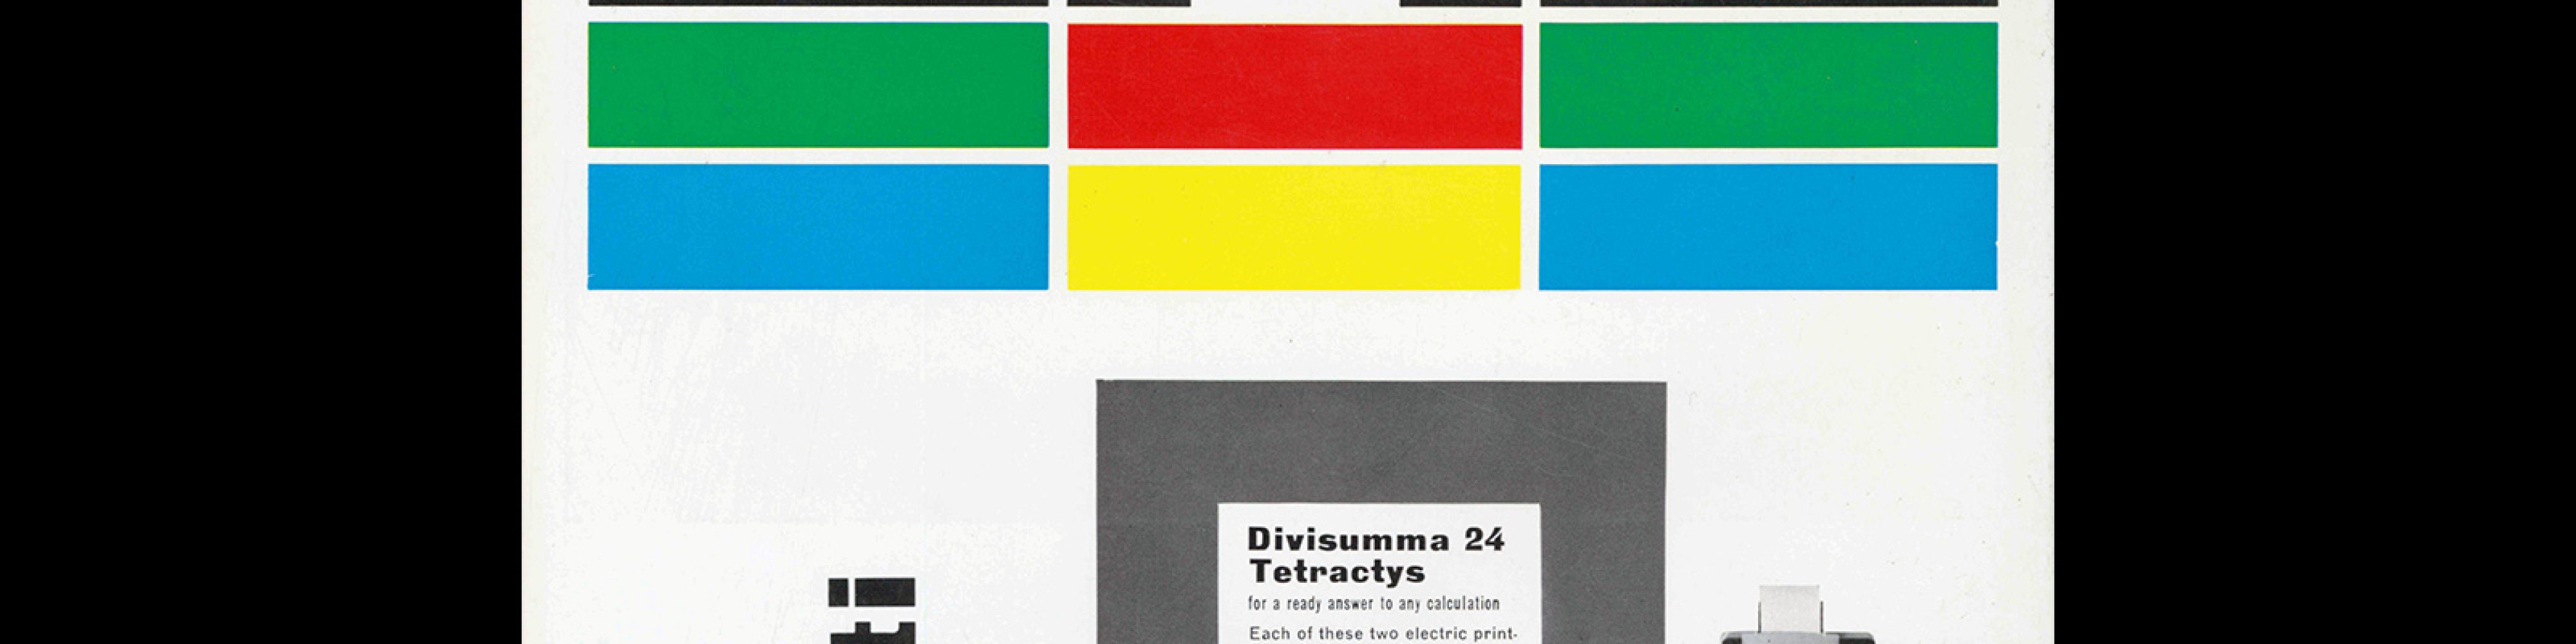 Olivetti Divisumma 24, international advertisement, 1959. Designed by Giovanni Pintori.